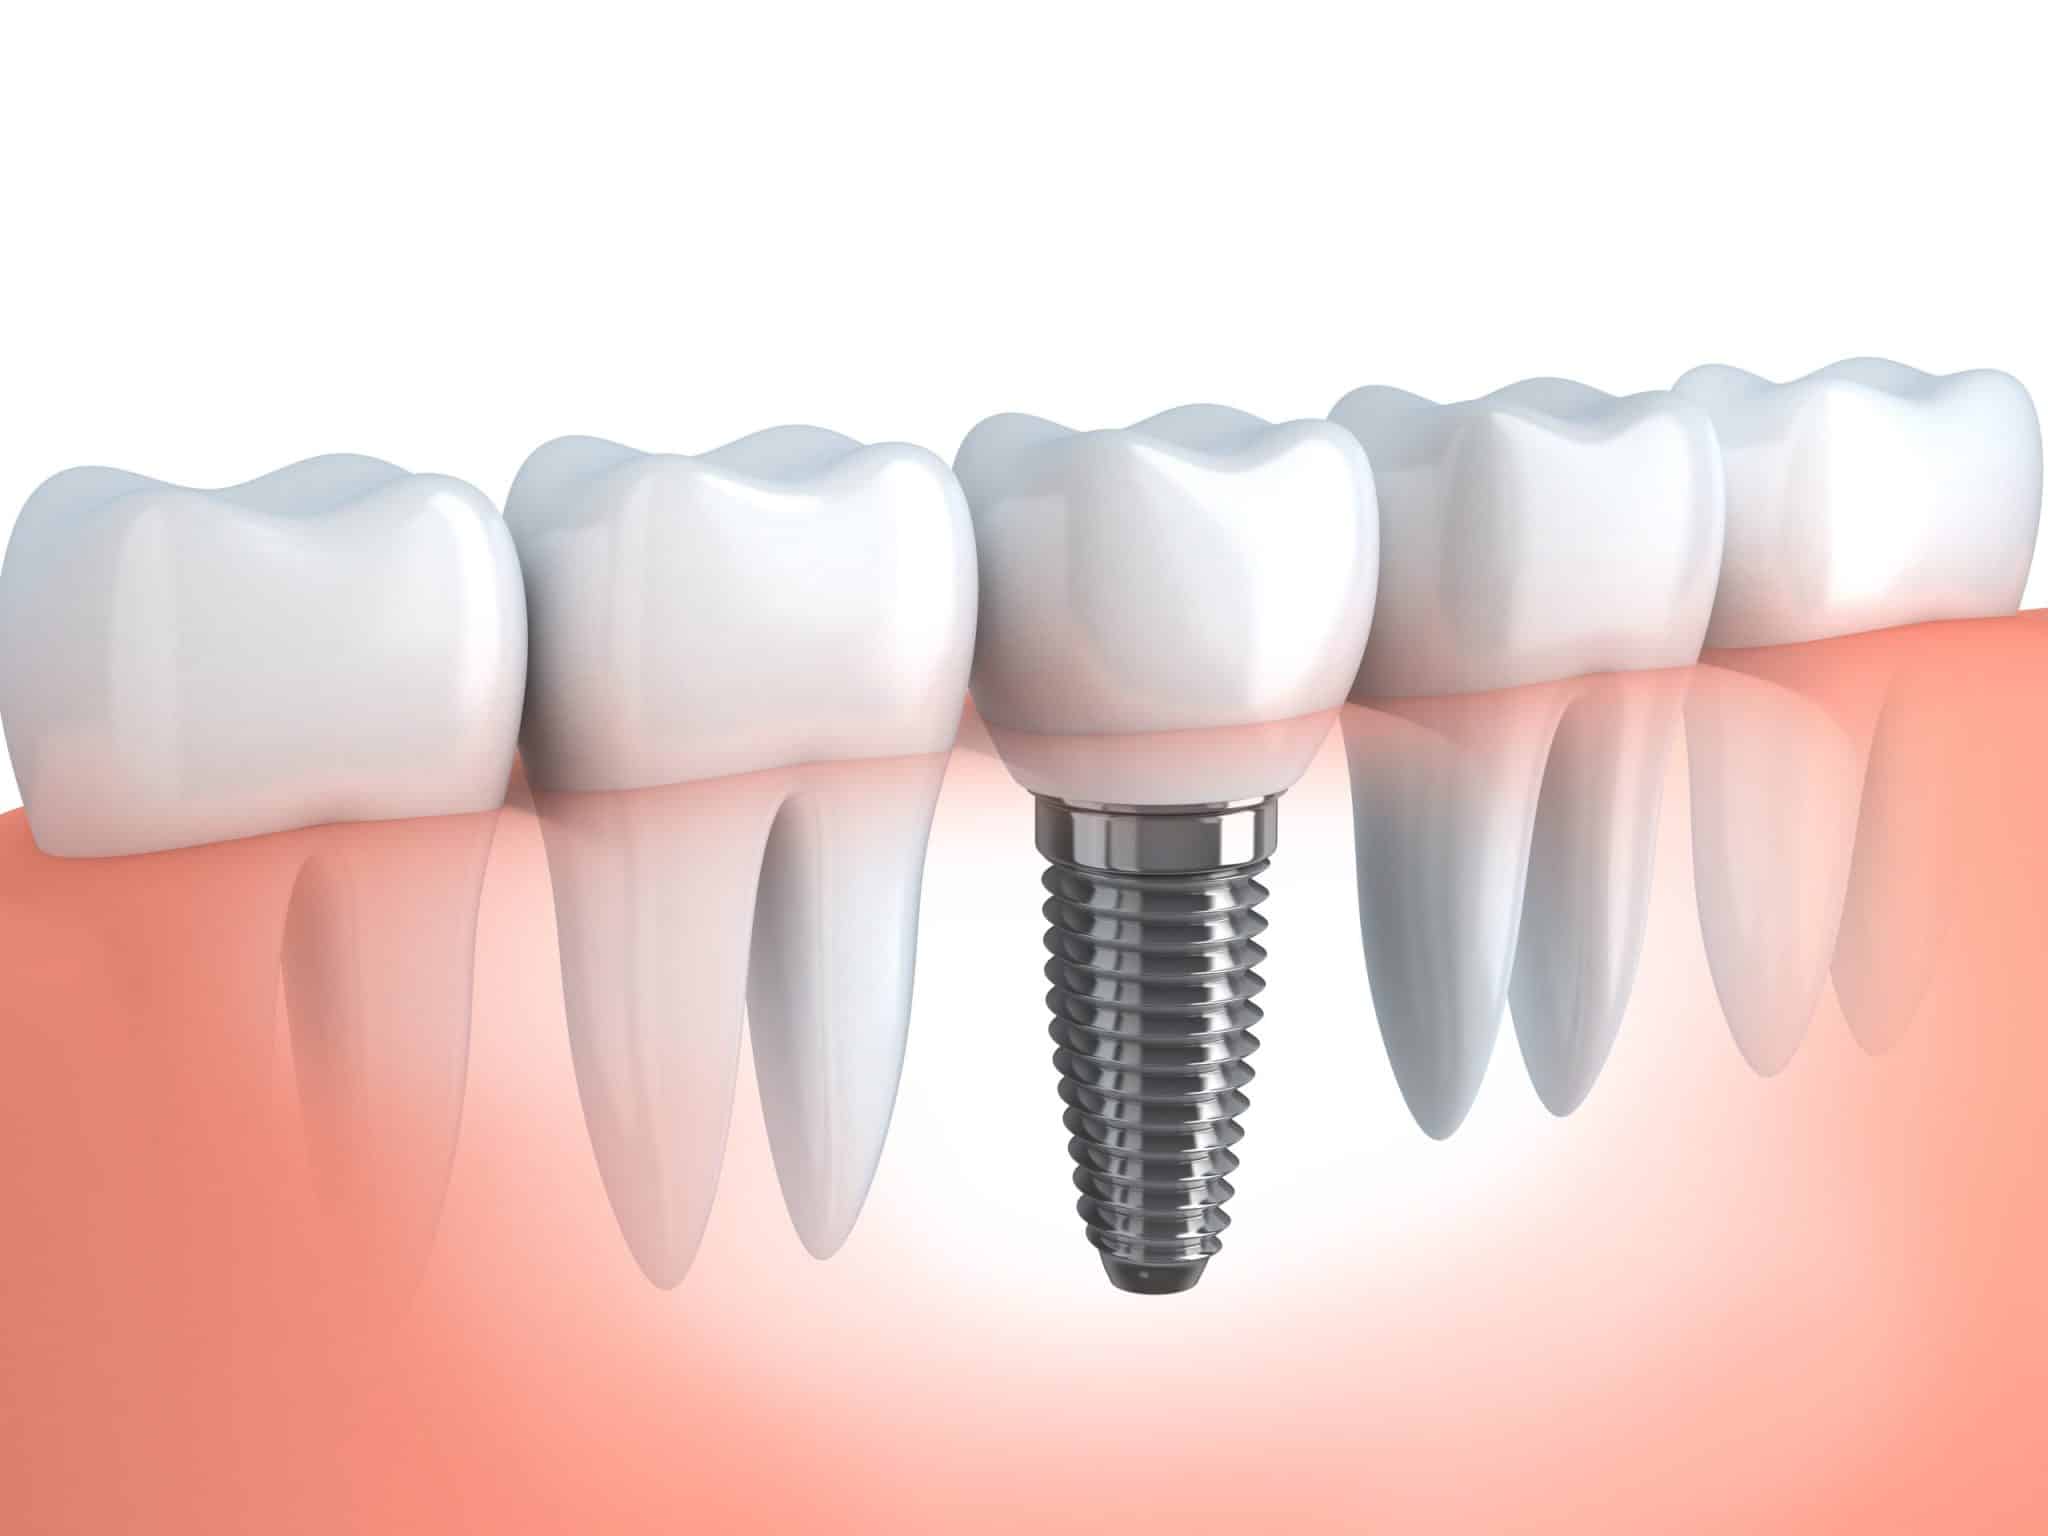 Dental Implants: A Permanent Solution